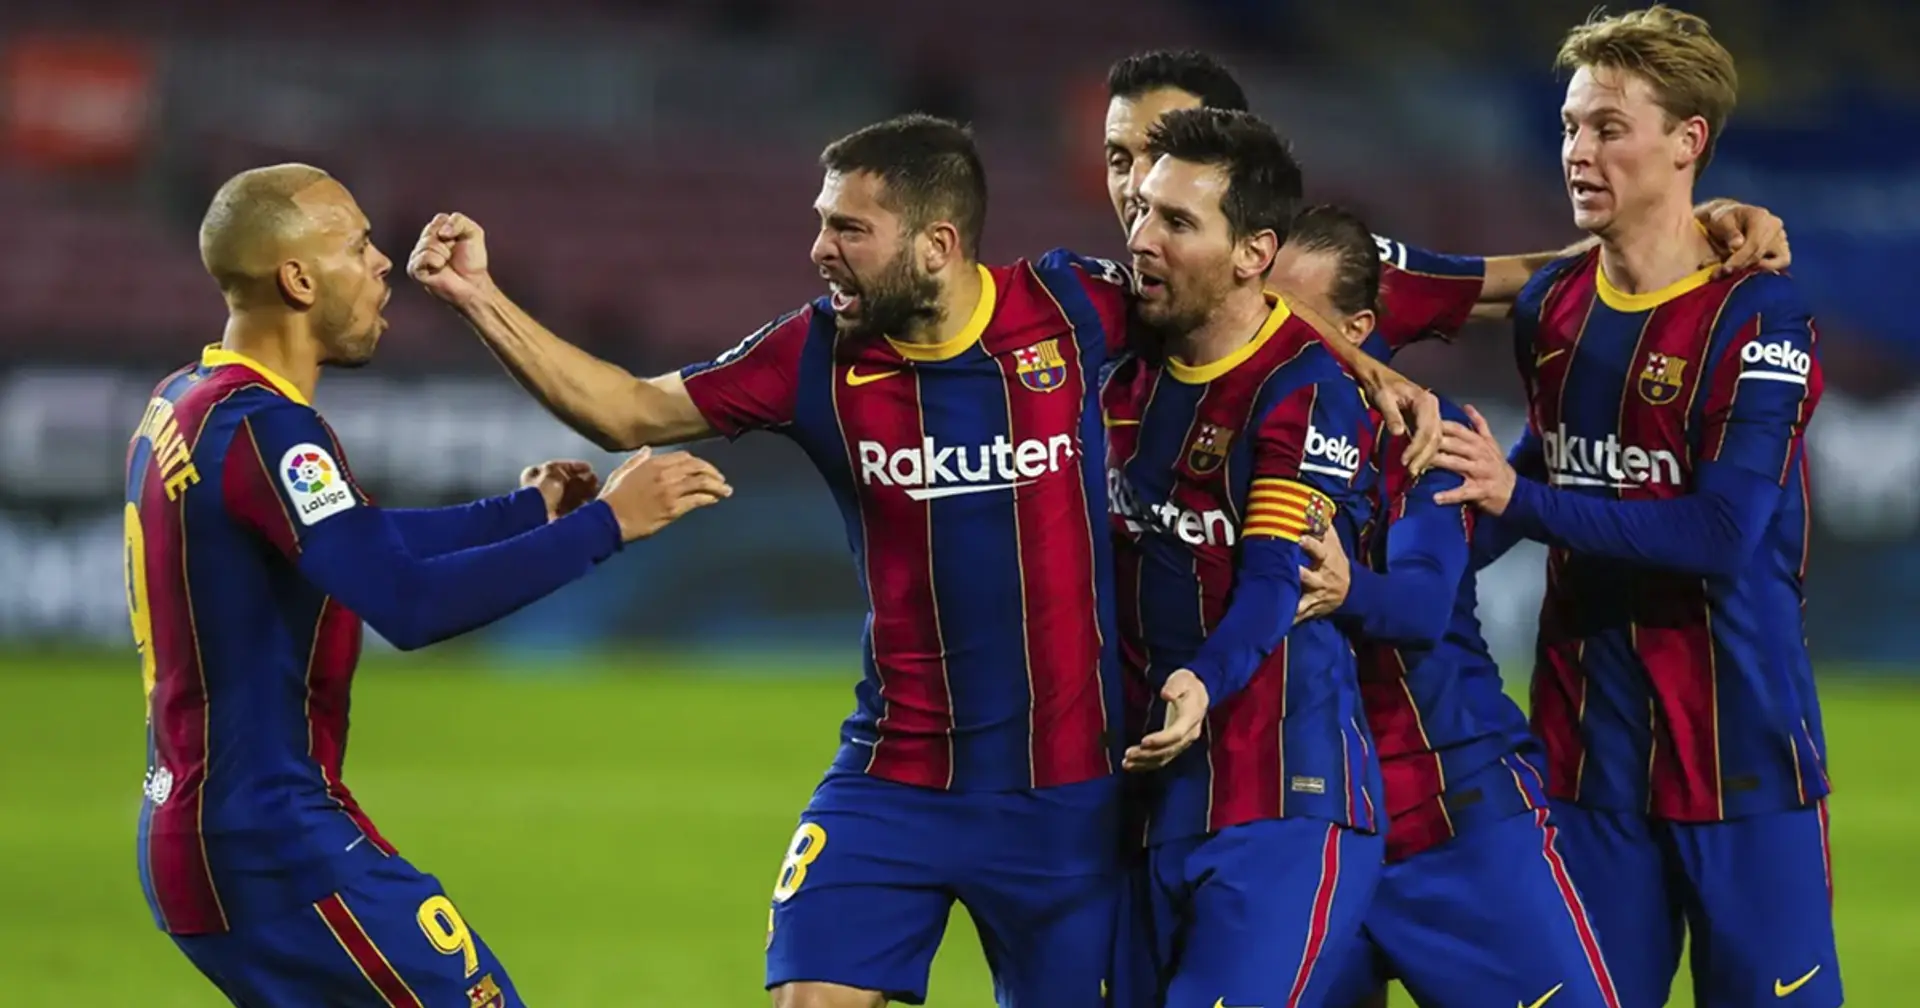 Barca complete first-ever comeback under Koeman in Real Sociedad win